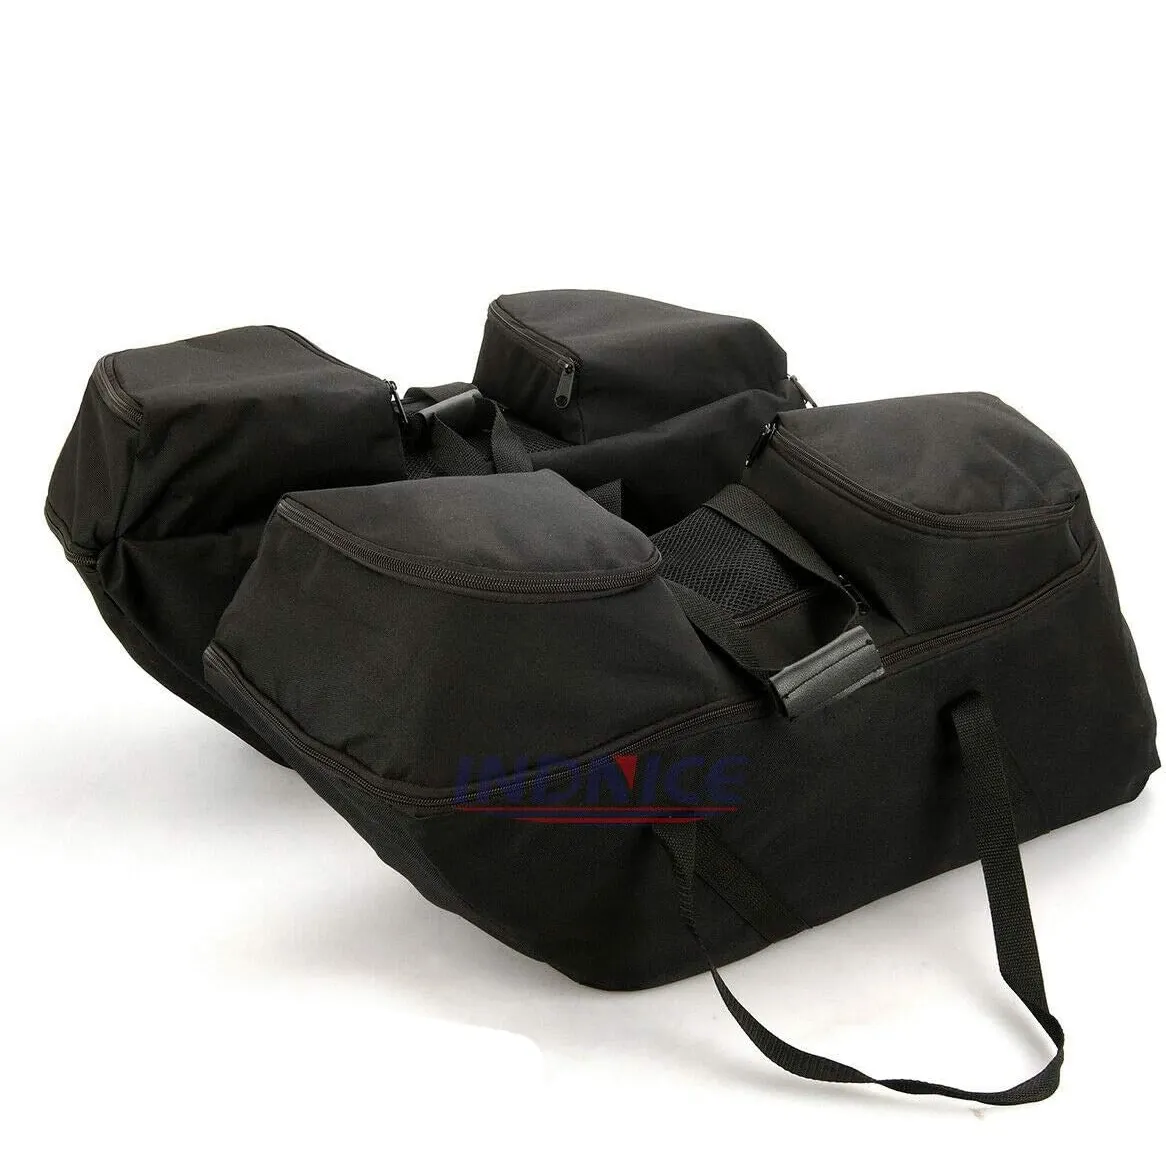 Motorcycle Travel Bags Suitcase Saddlebags Waterproof Racing Travel Large inner saddlebags for Harley Touring 2014-2023